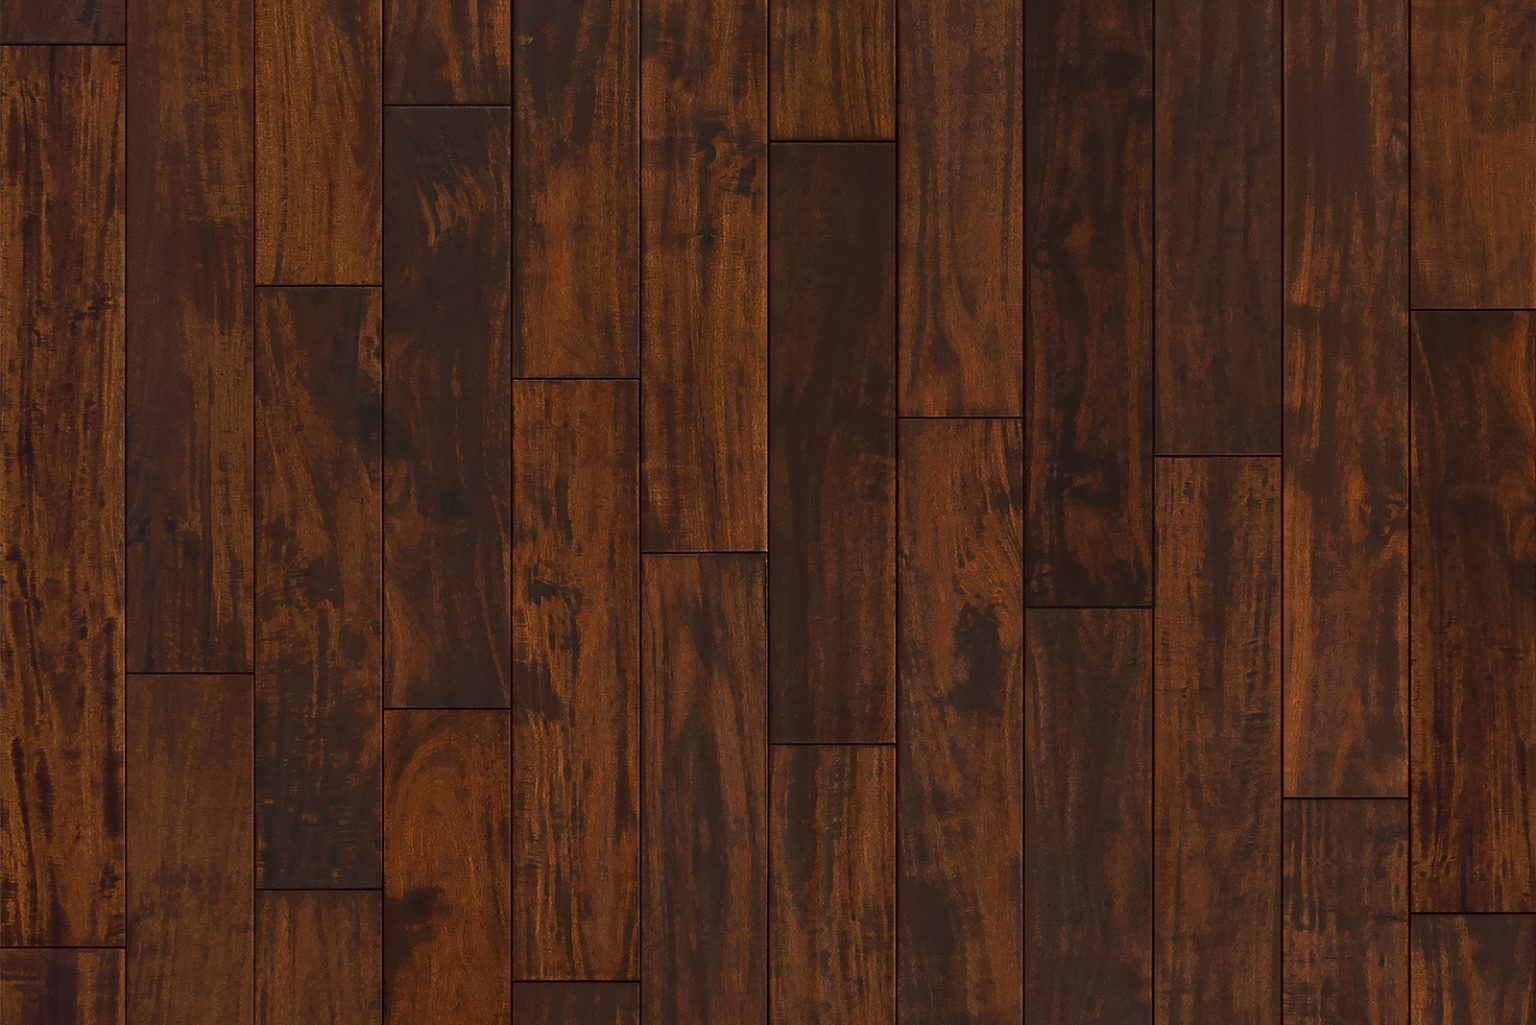 walnut wood flooring texture